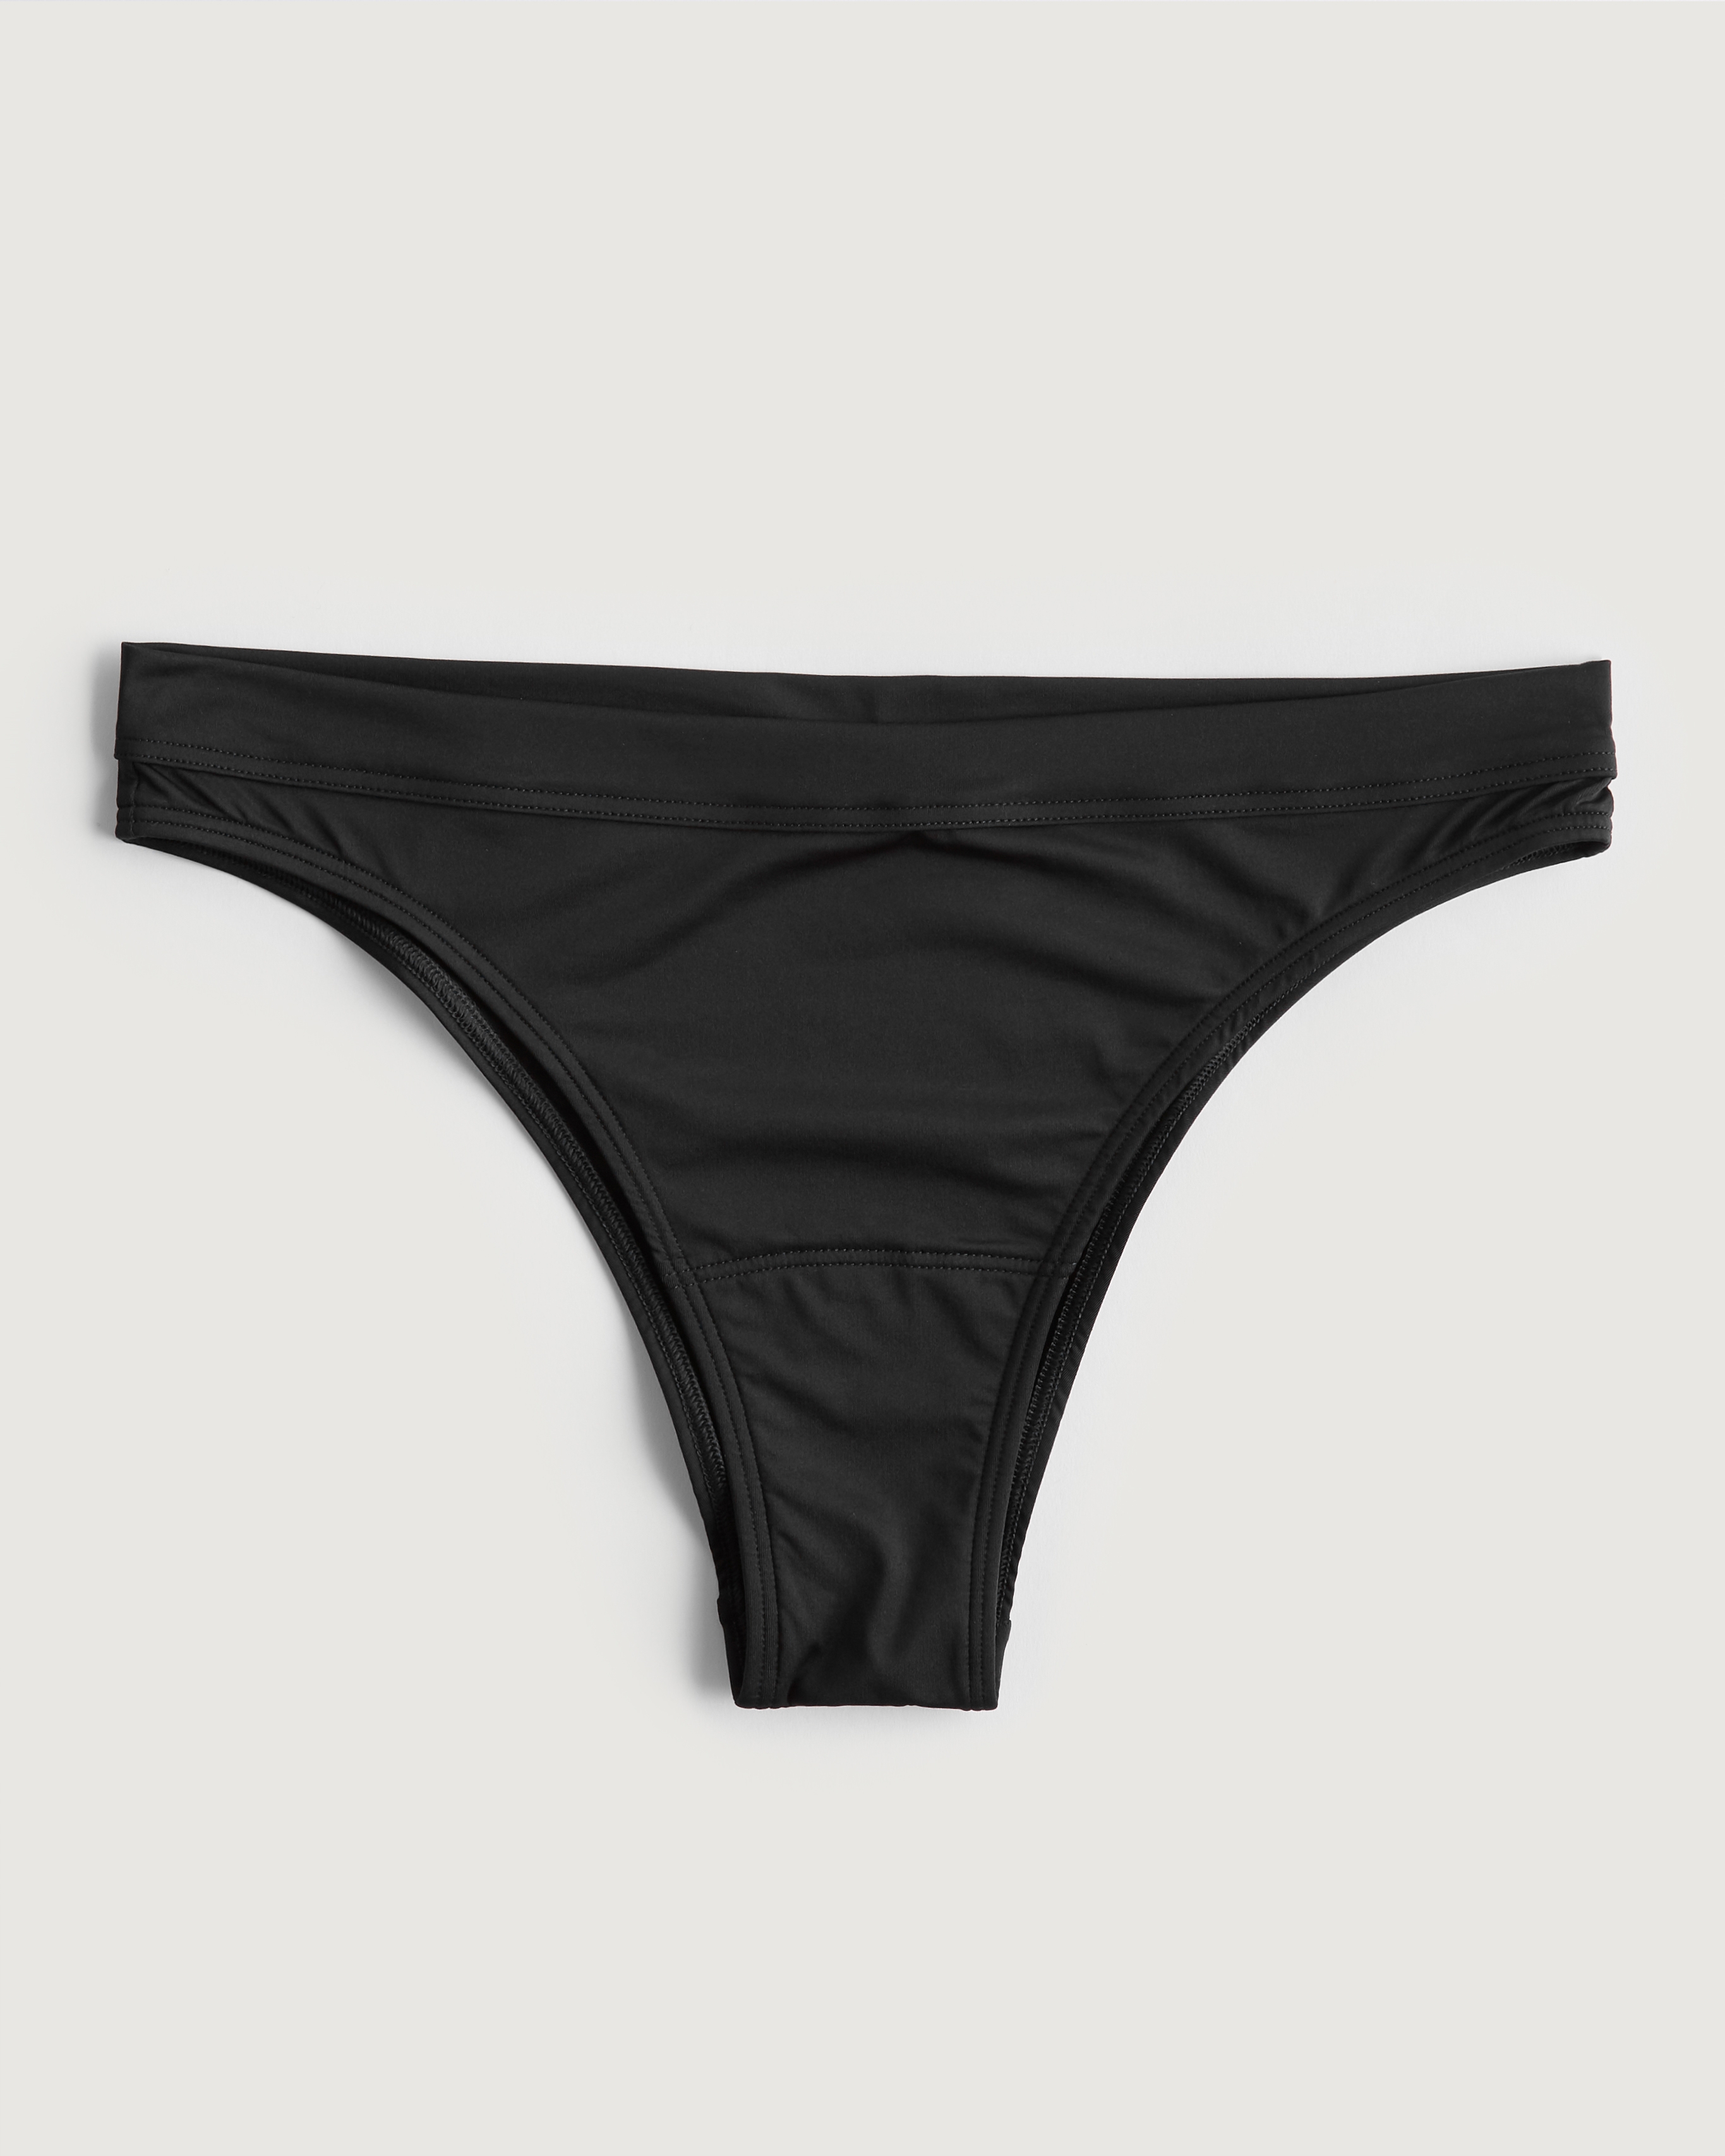 Gilly Hicks Bikini Panties for Women